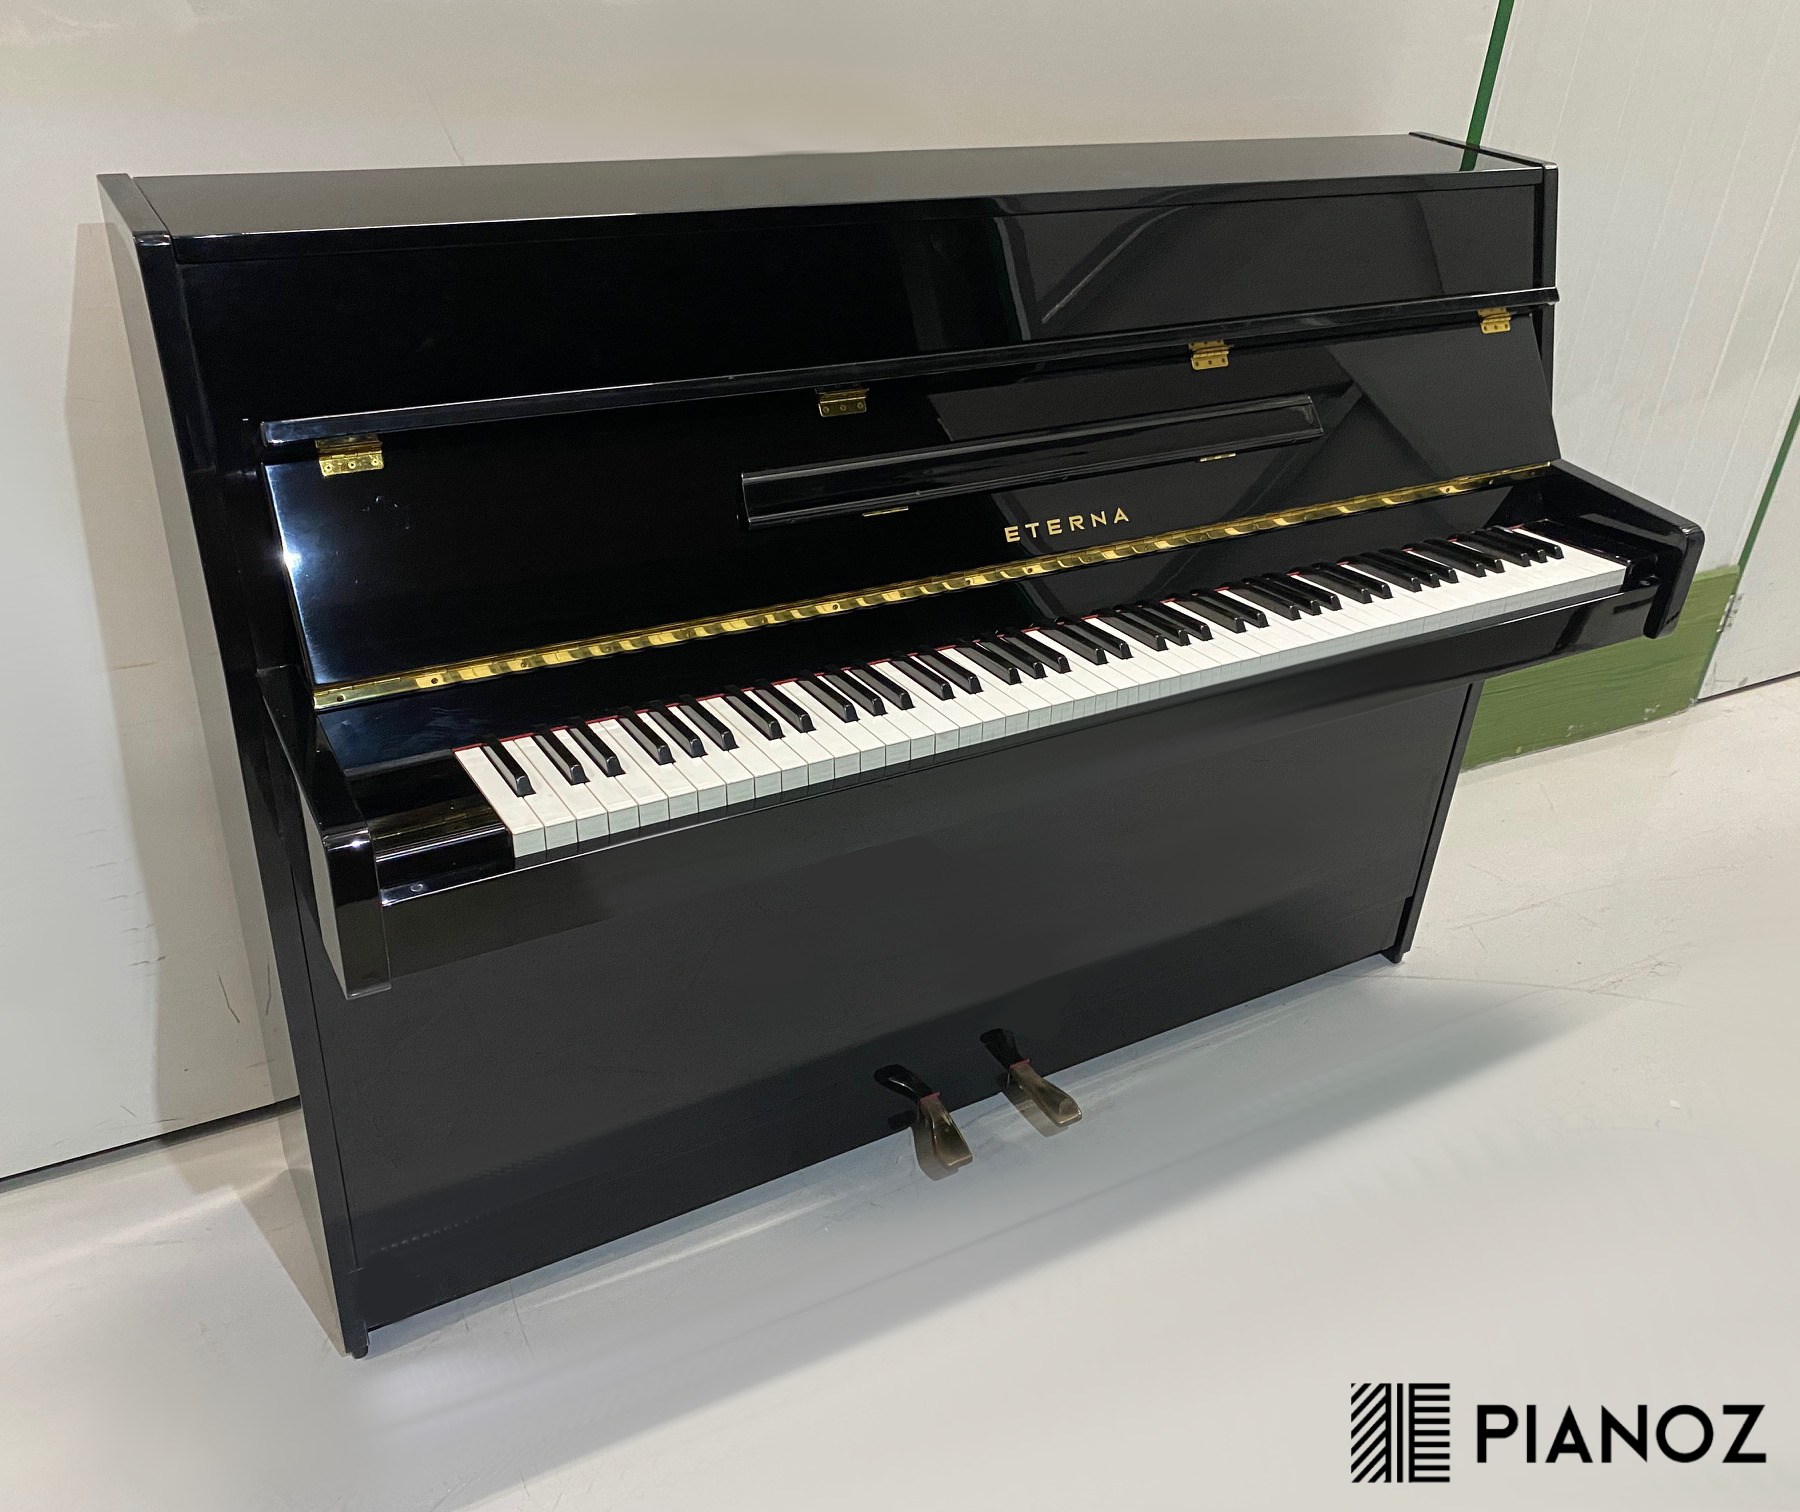 Yamaha Eterna Japanese Upright Piano for sale UK | P I A N O Z